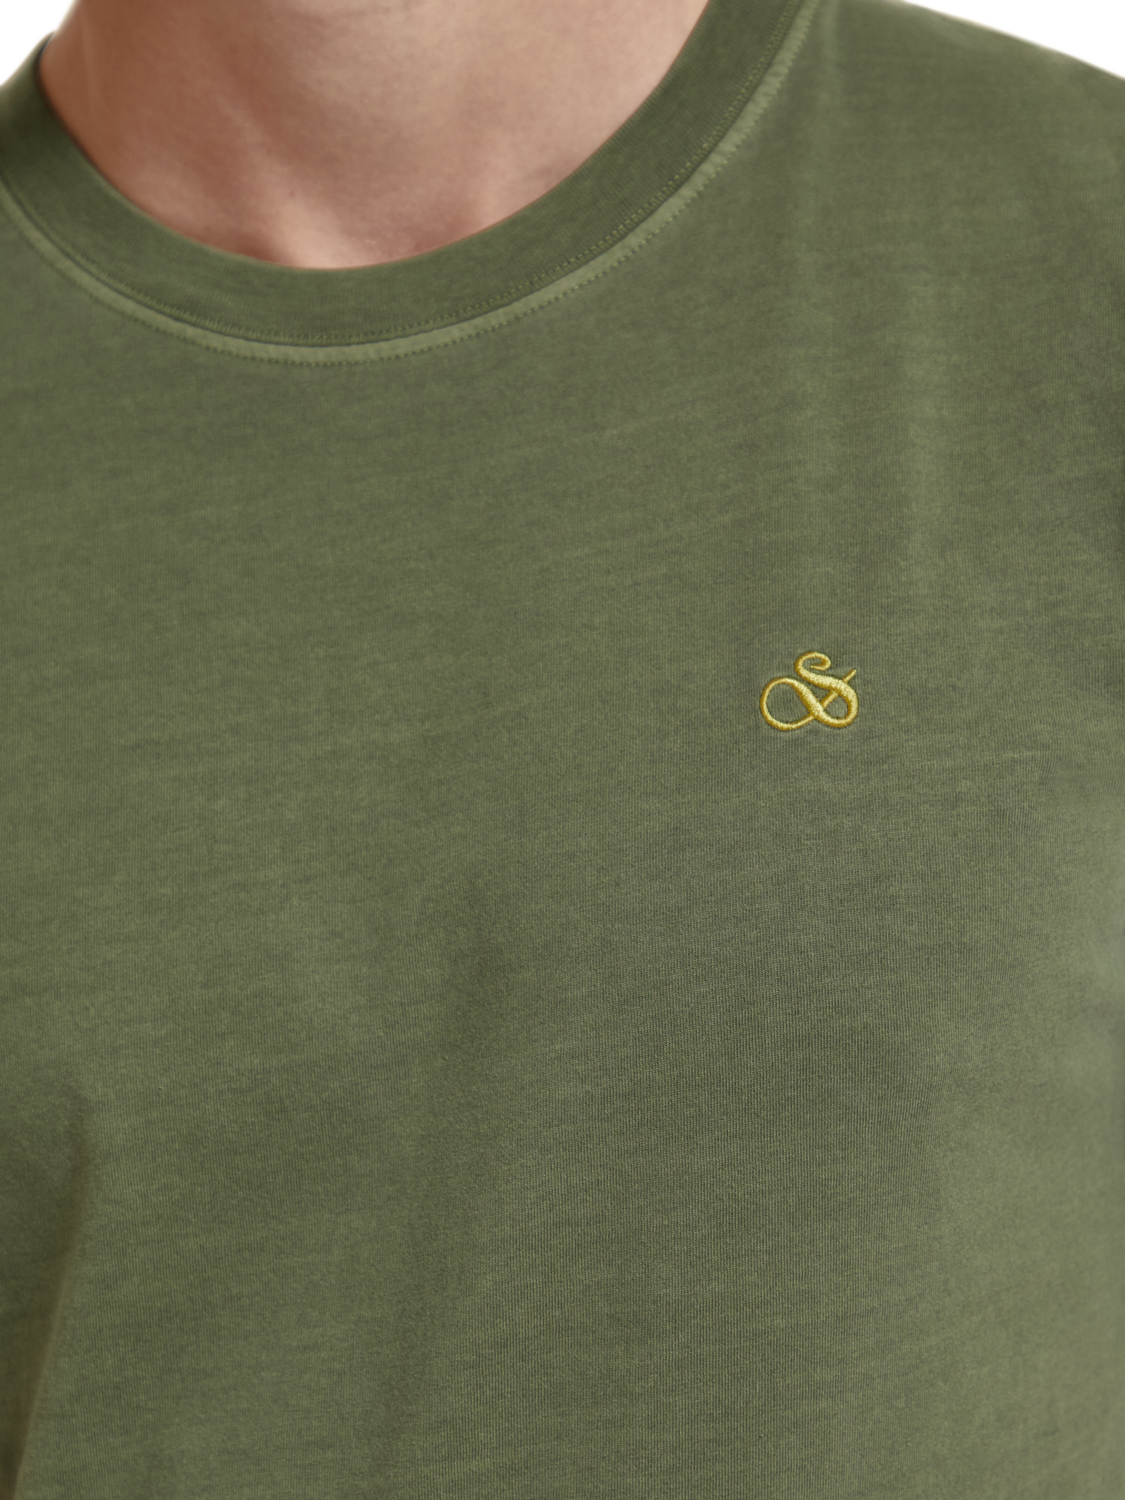 Scotch & Soda - Logo T-Shirt - Twilight or Field Green